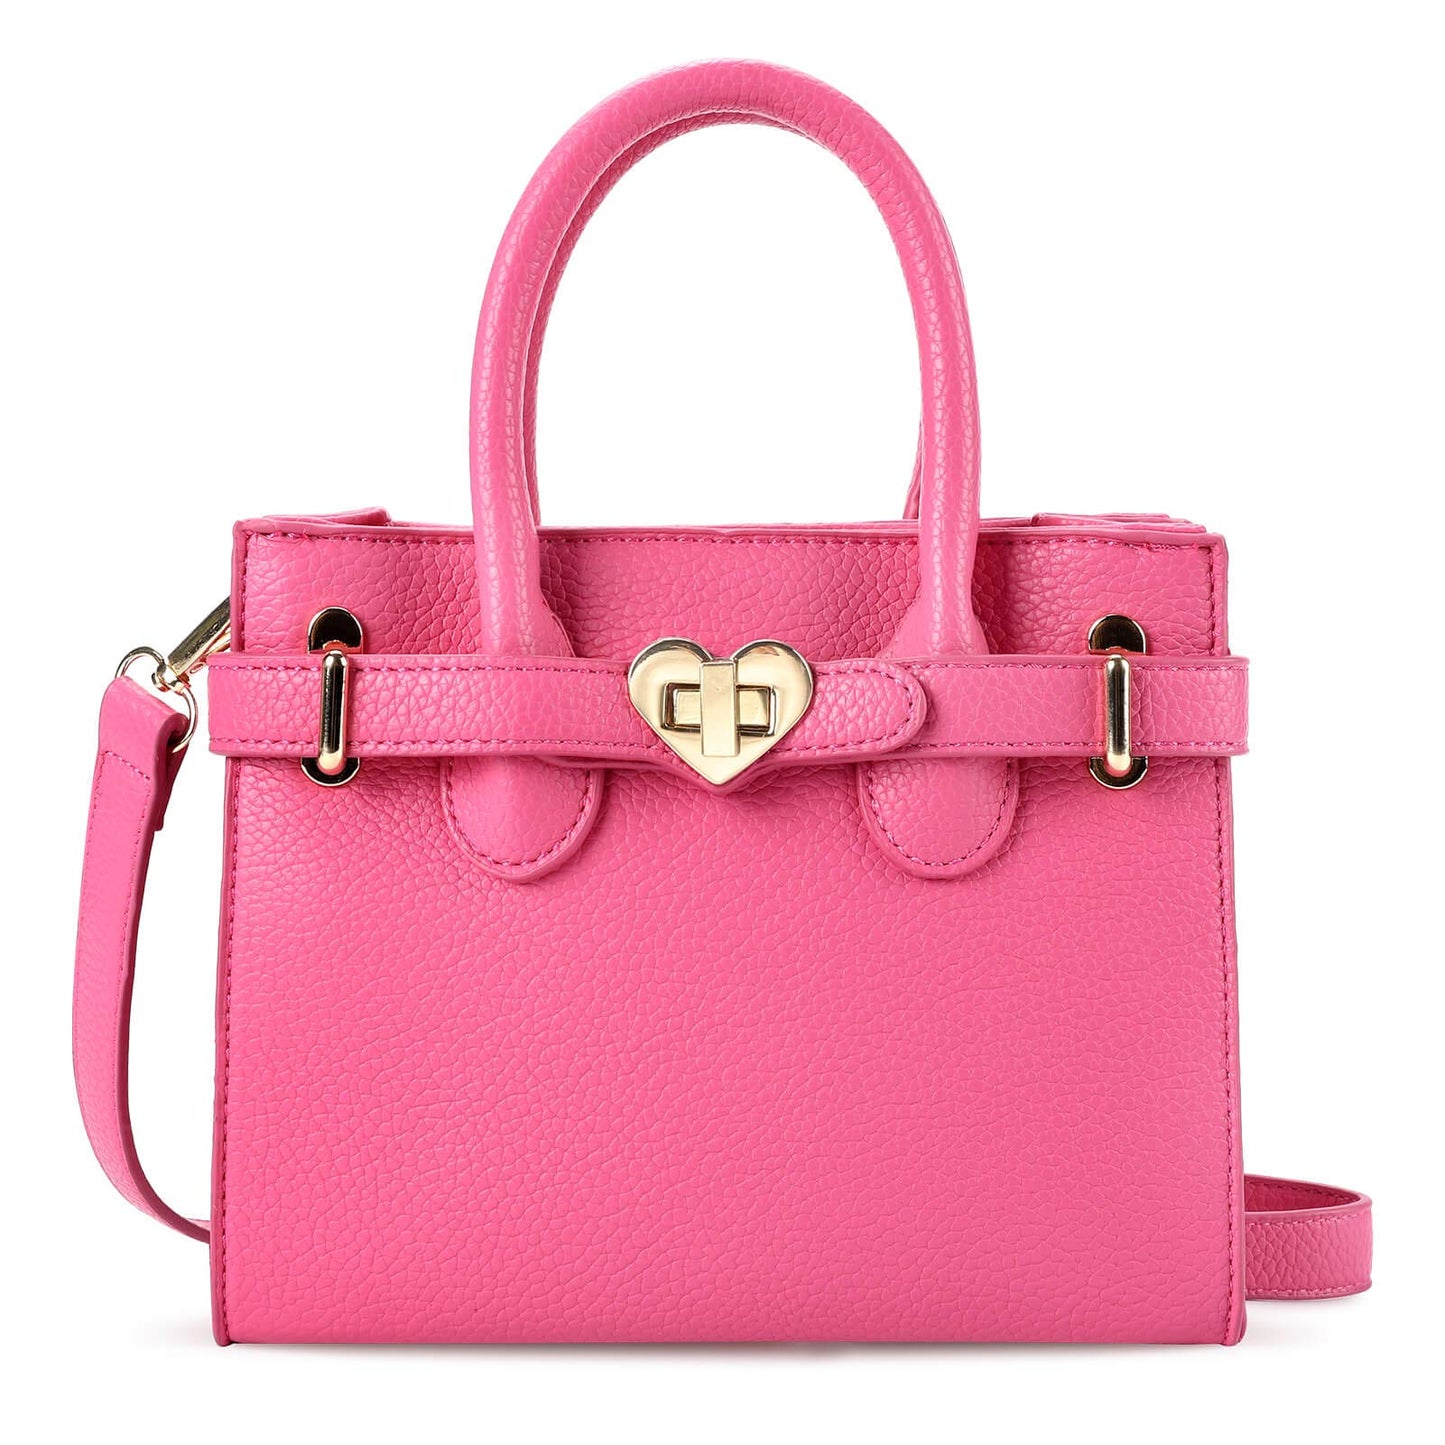 Miss Classy Handbag Mibasies Hot Pink 